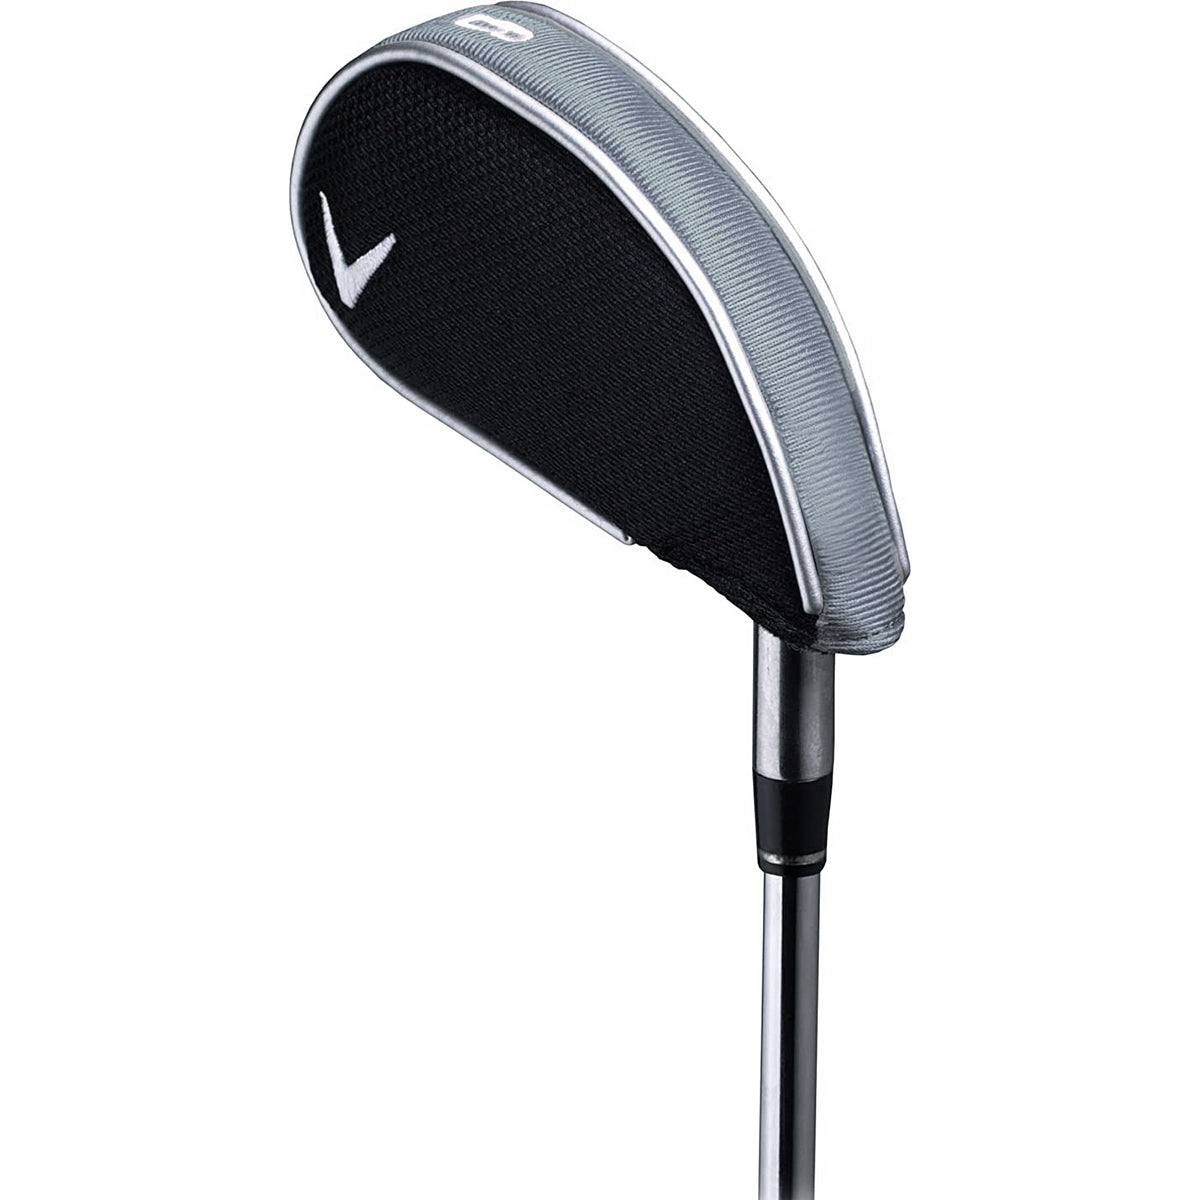 Callaway Golf Premium Iron Headcovers Callaway